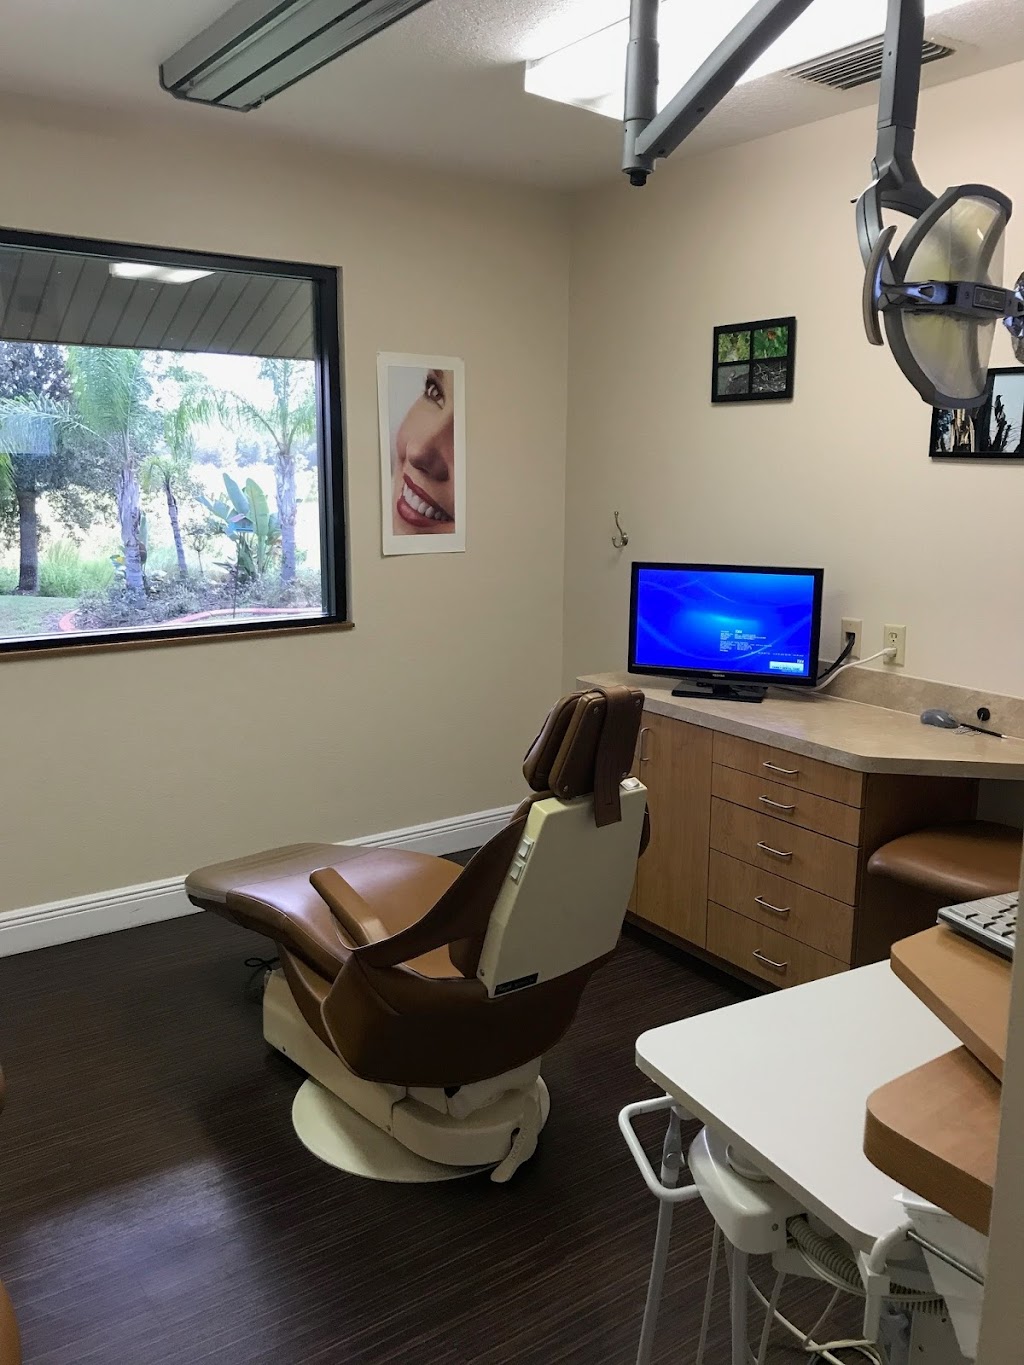 Lakeside Family Dental Care | 8454 Northcliffe Blvd, Spring Hill, FL 34606, USA | Phone: (352) 686-1122